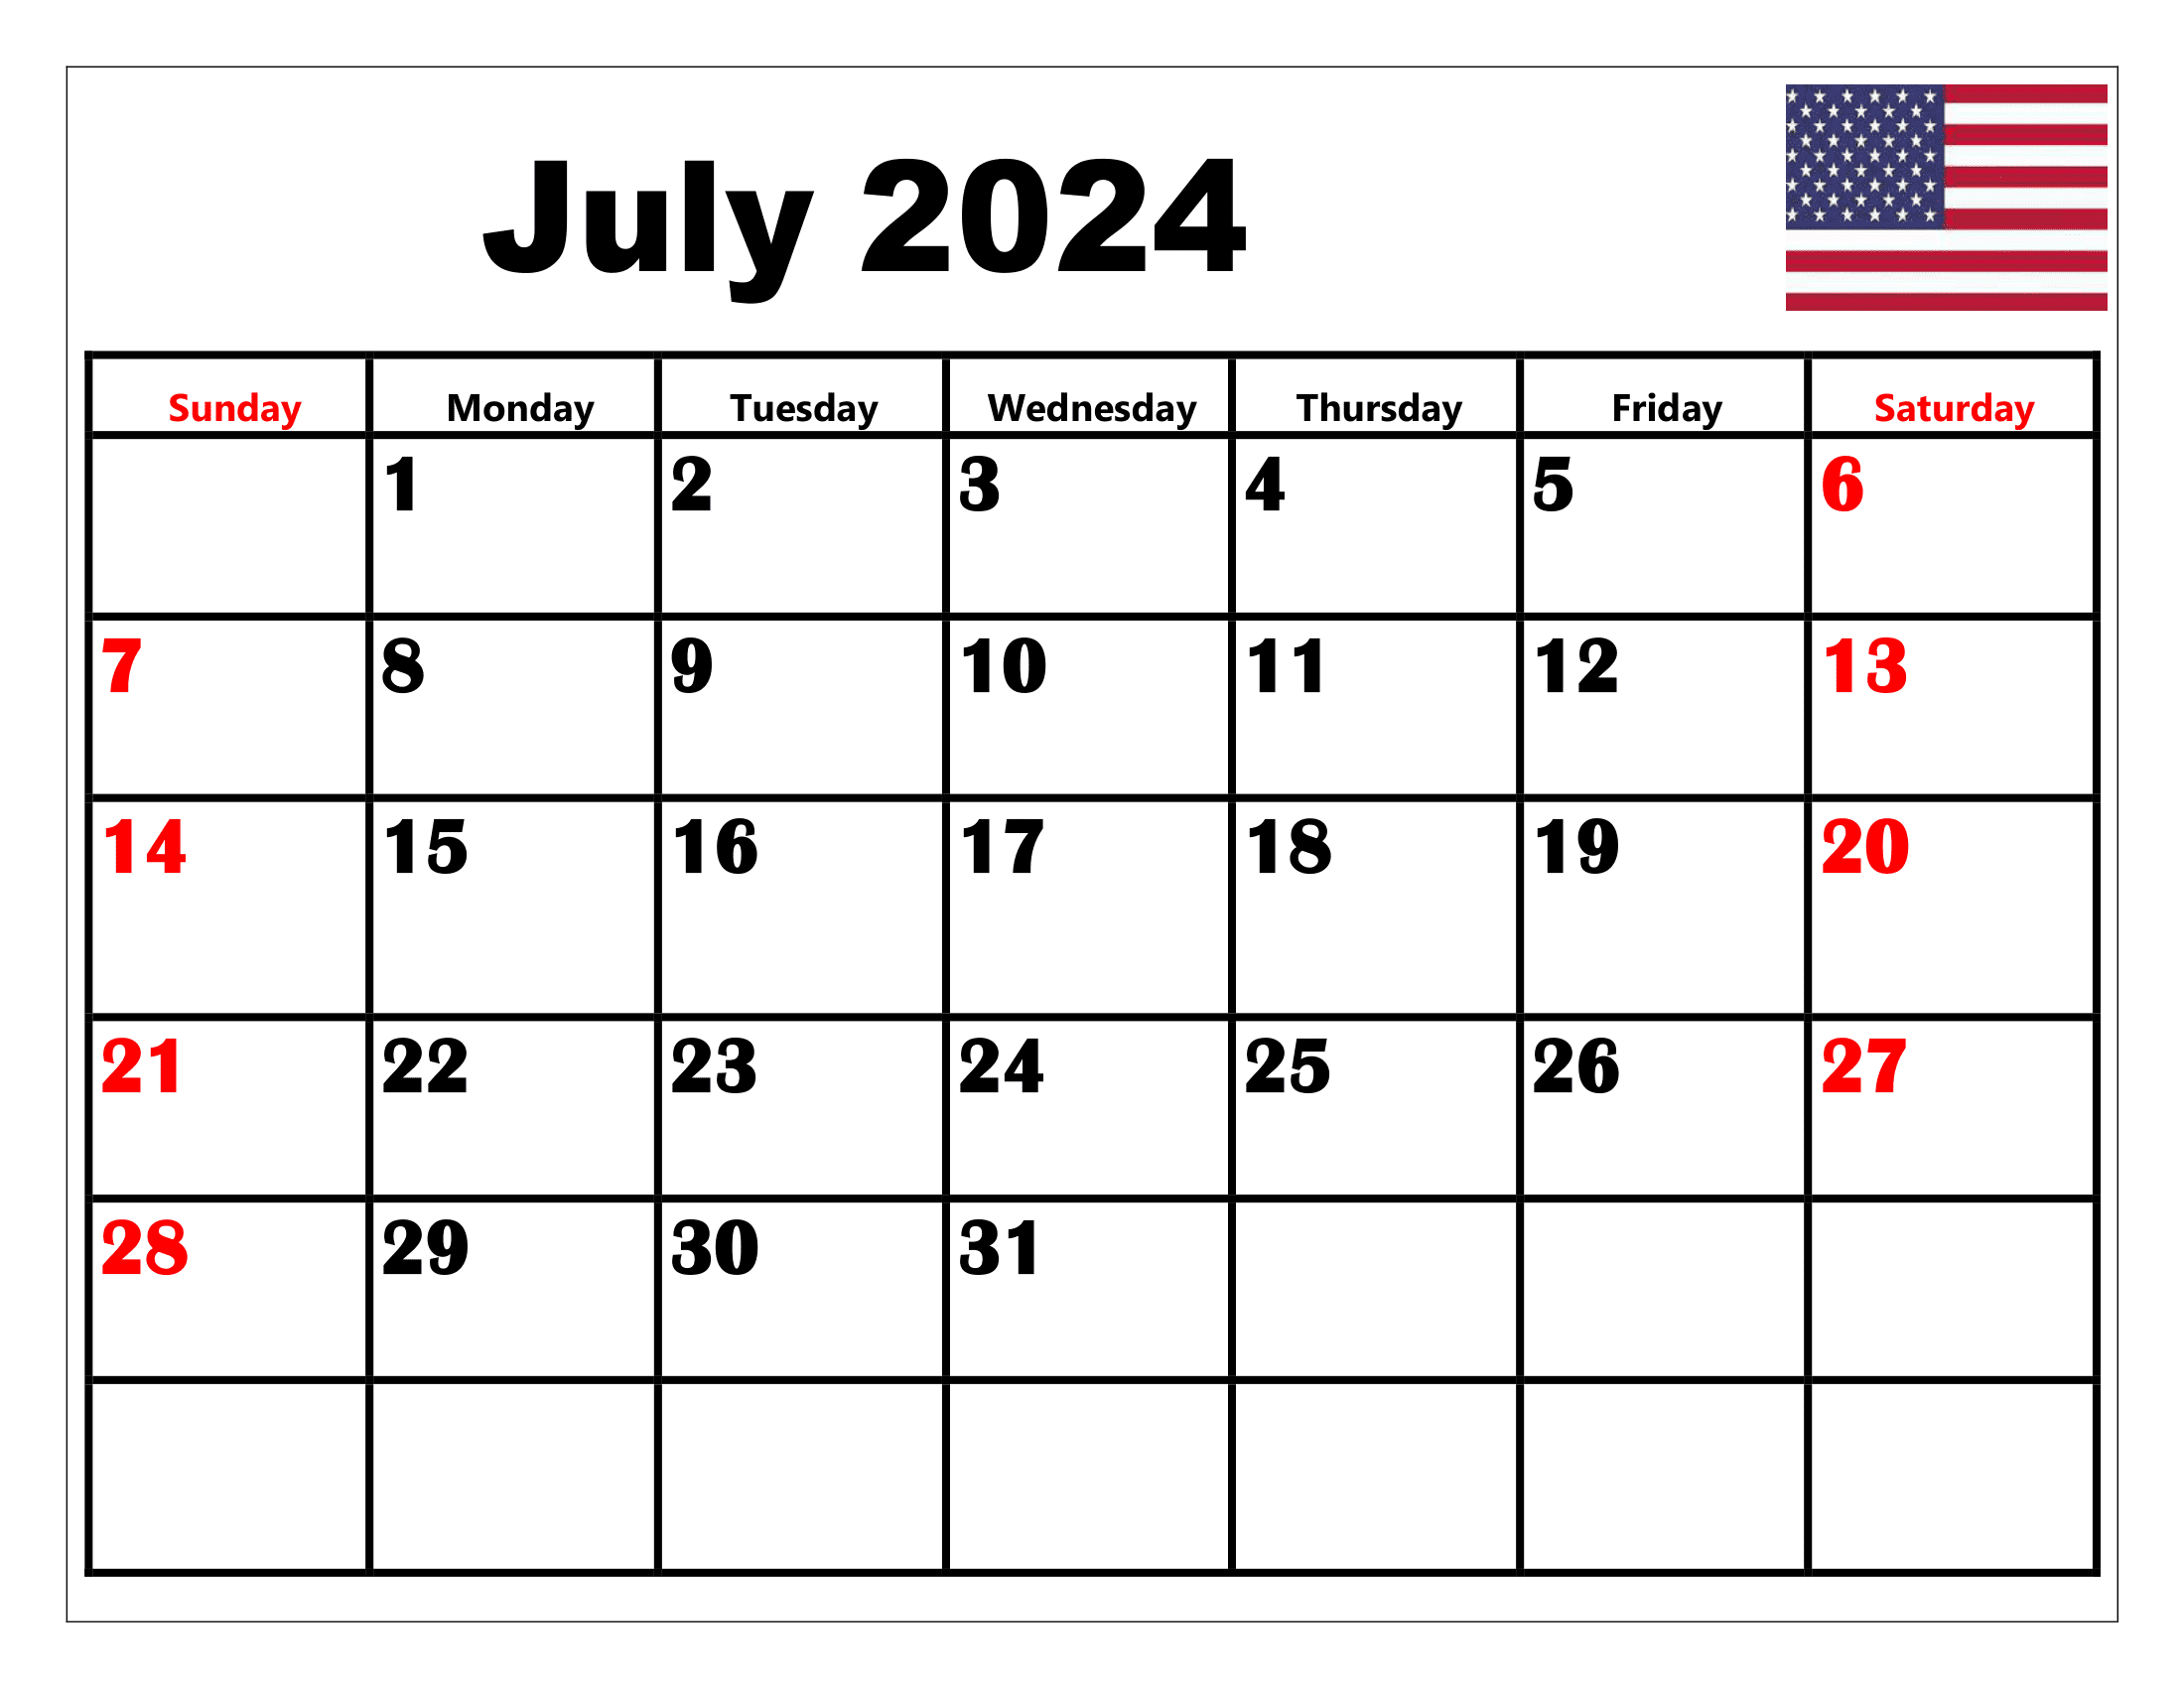 July 2024 Calendar Printable Pdf With Holidays Free Template for Free Printable July 2024 Calendar With Holidays